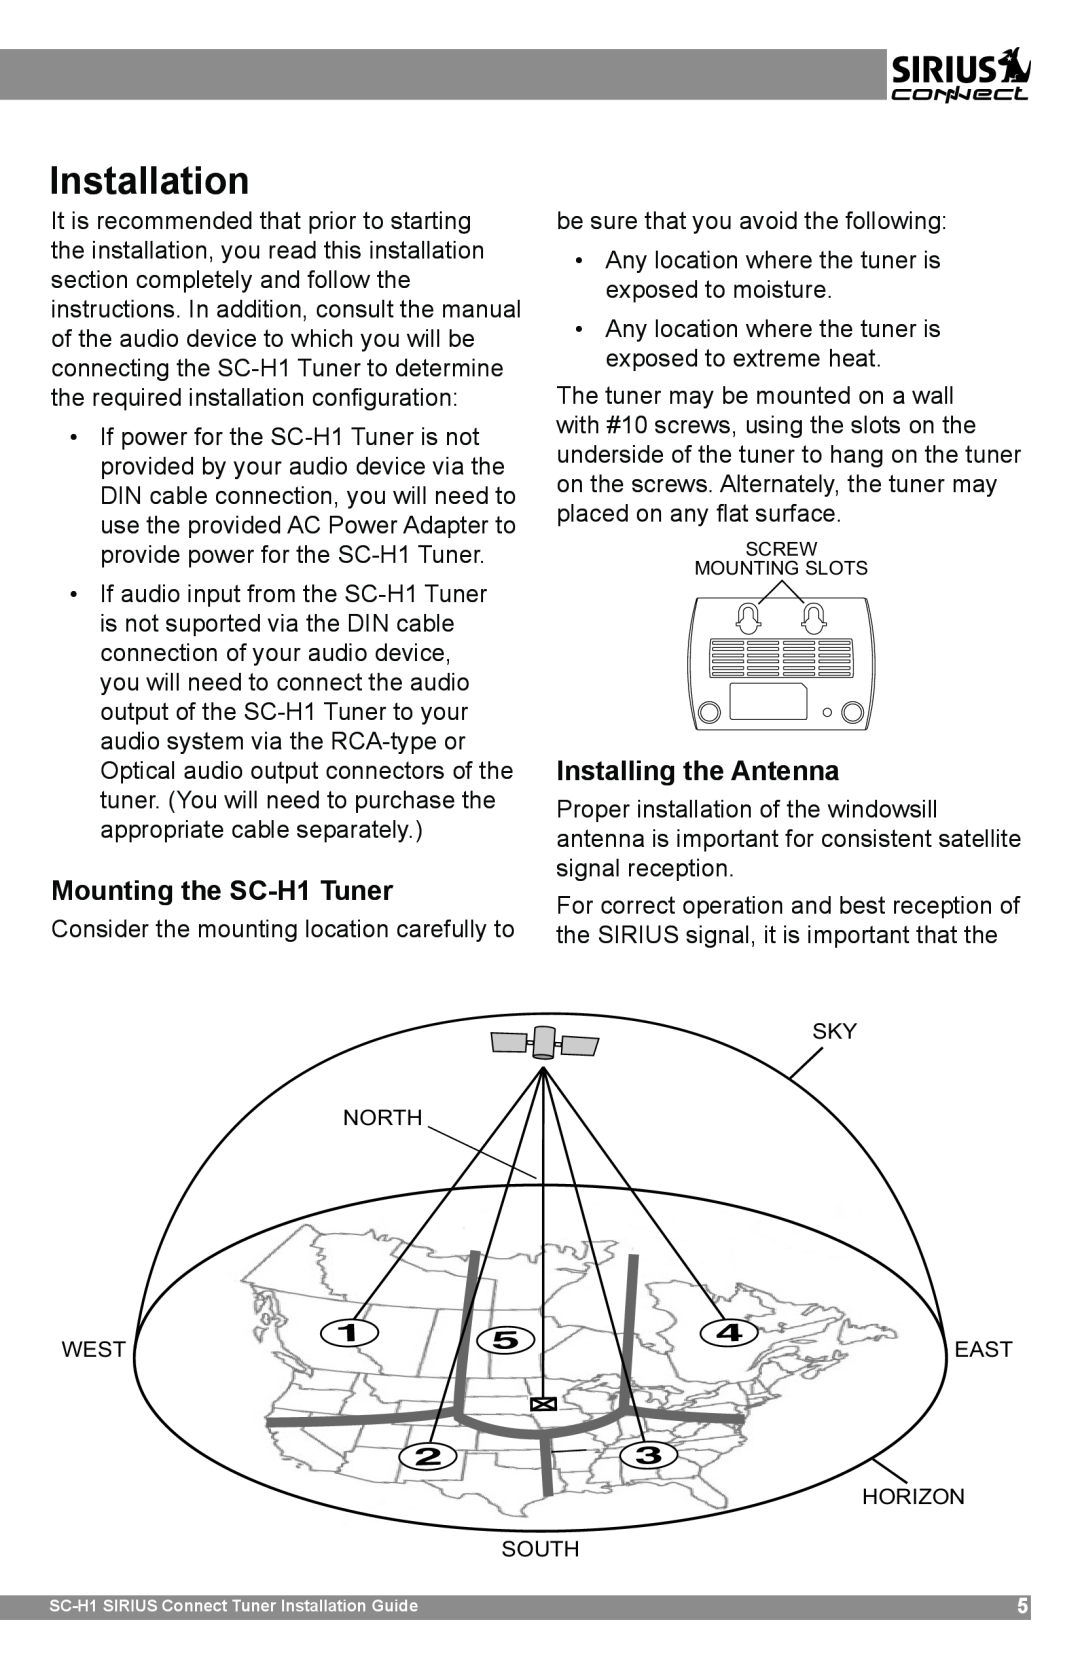 Sirius Satellite Radio SCH1 manual Installation, Mounting the SC-H1Tuner, Installing the Antenna 